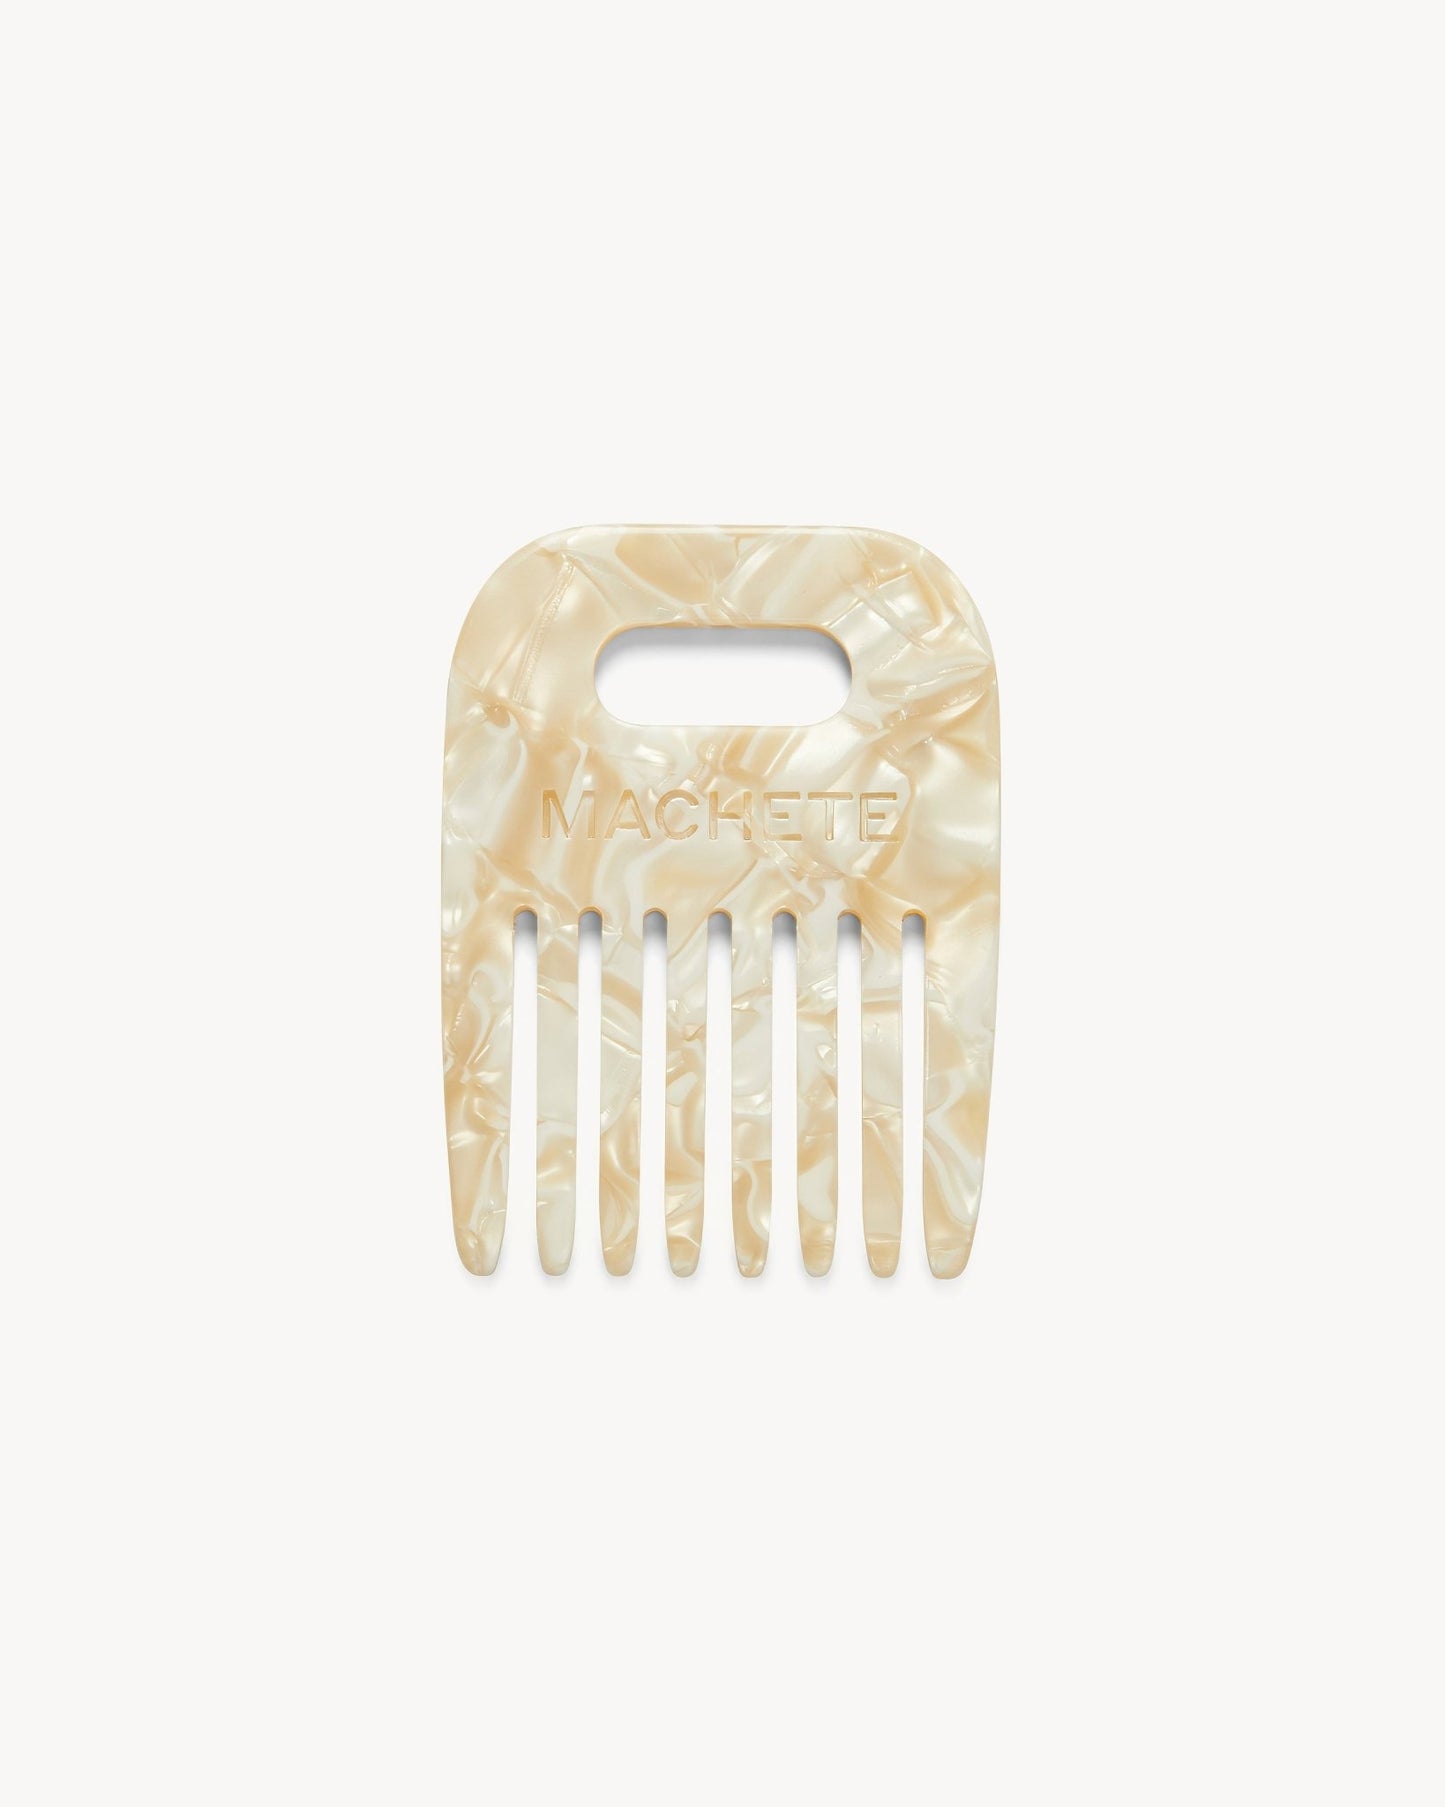 MACHETE No. 4 Comb in Ivory